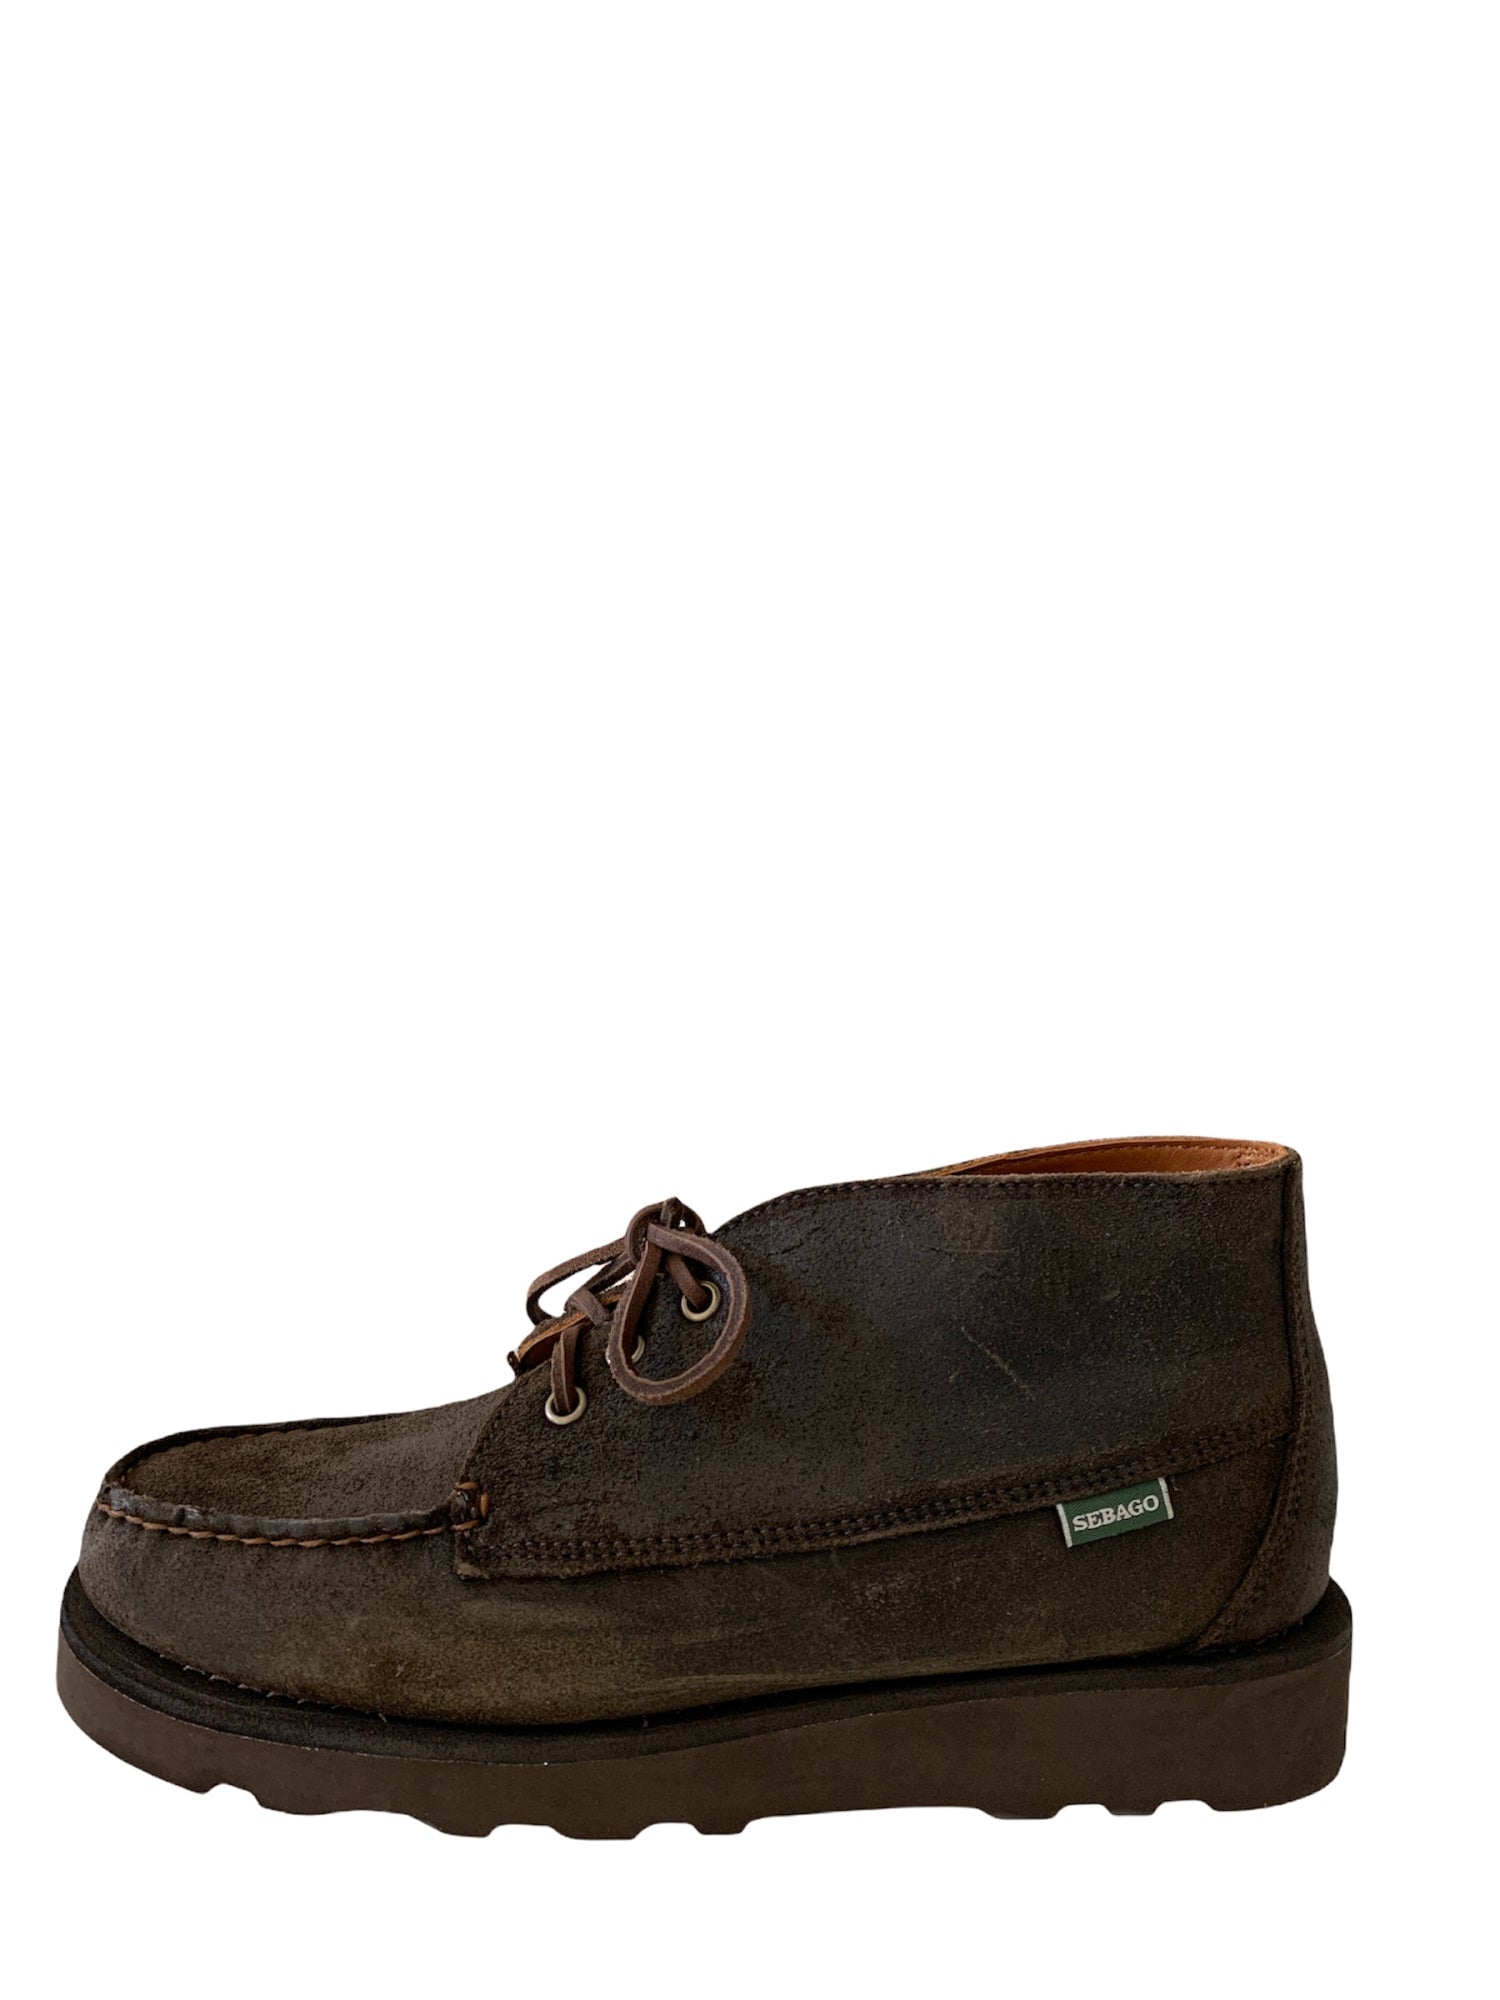 Sebago TATANKA scarpa da uomo total dark brown,781138W – Gruppo Raffaella